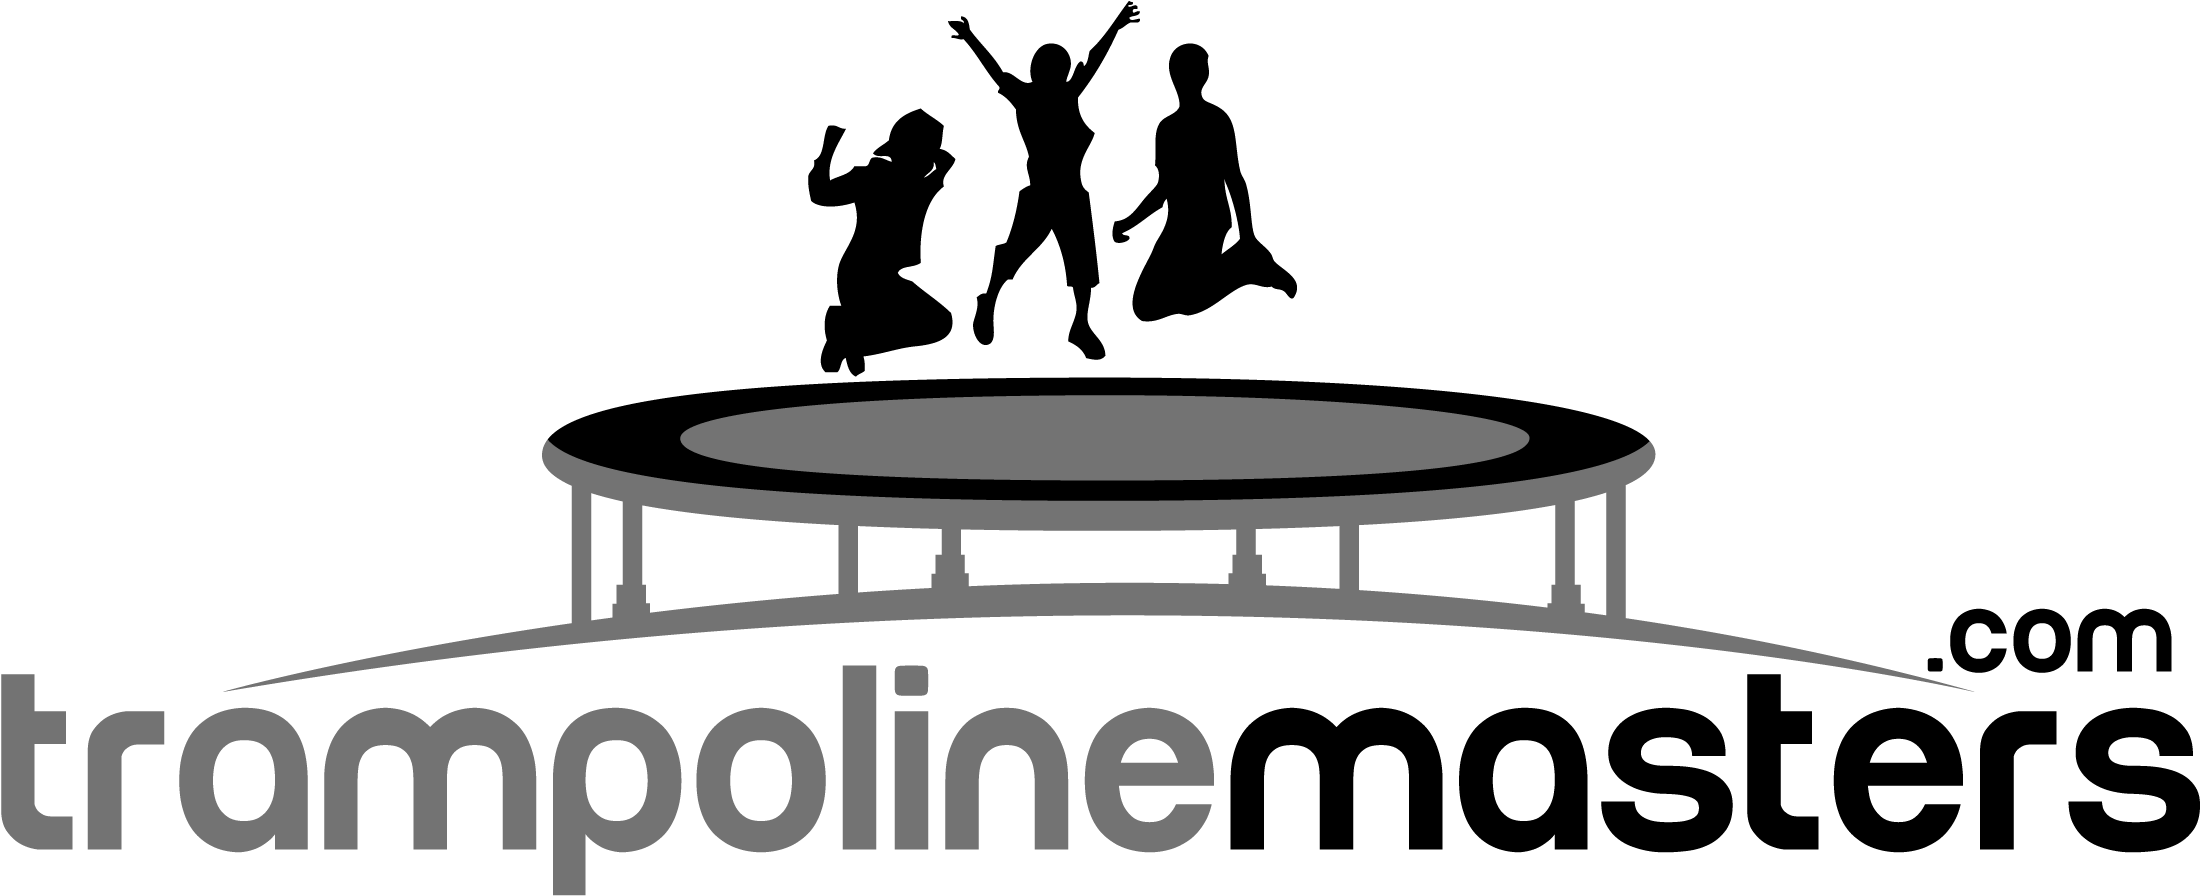 A Logo Of A Trampoline